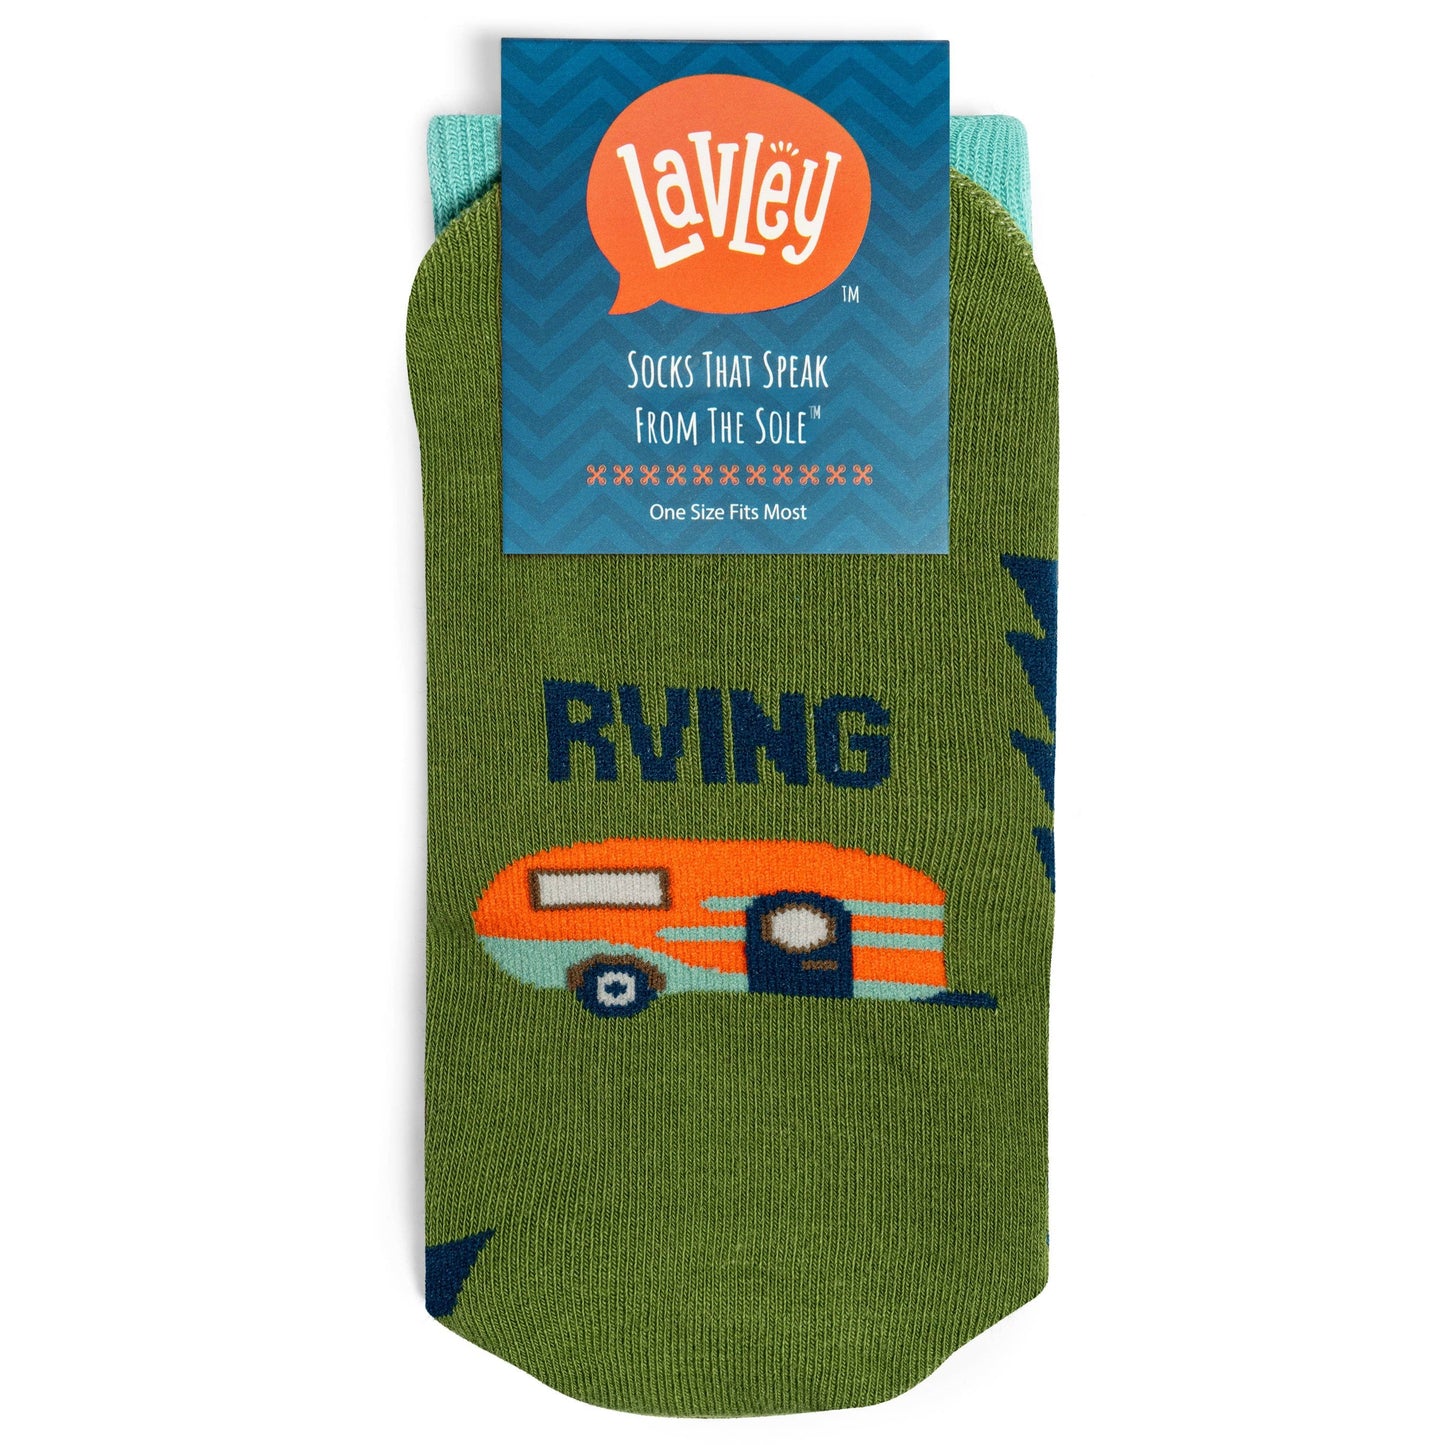 Lavley - I'd Rather Be RVing Socks